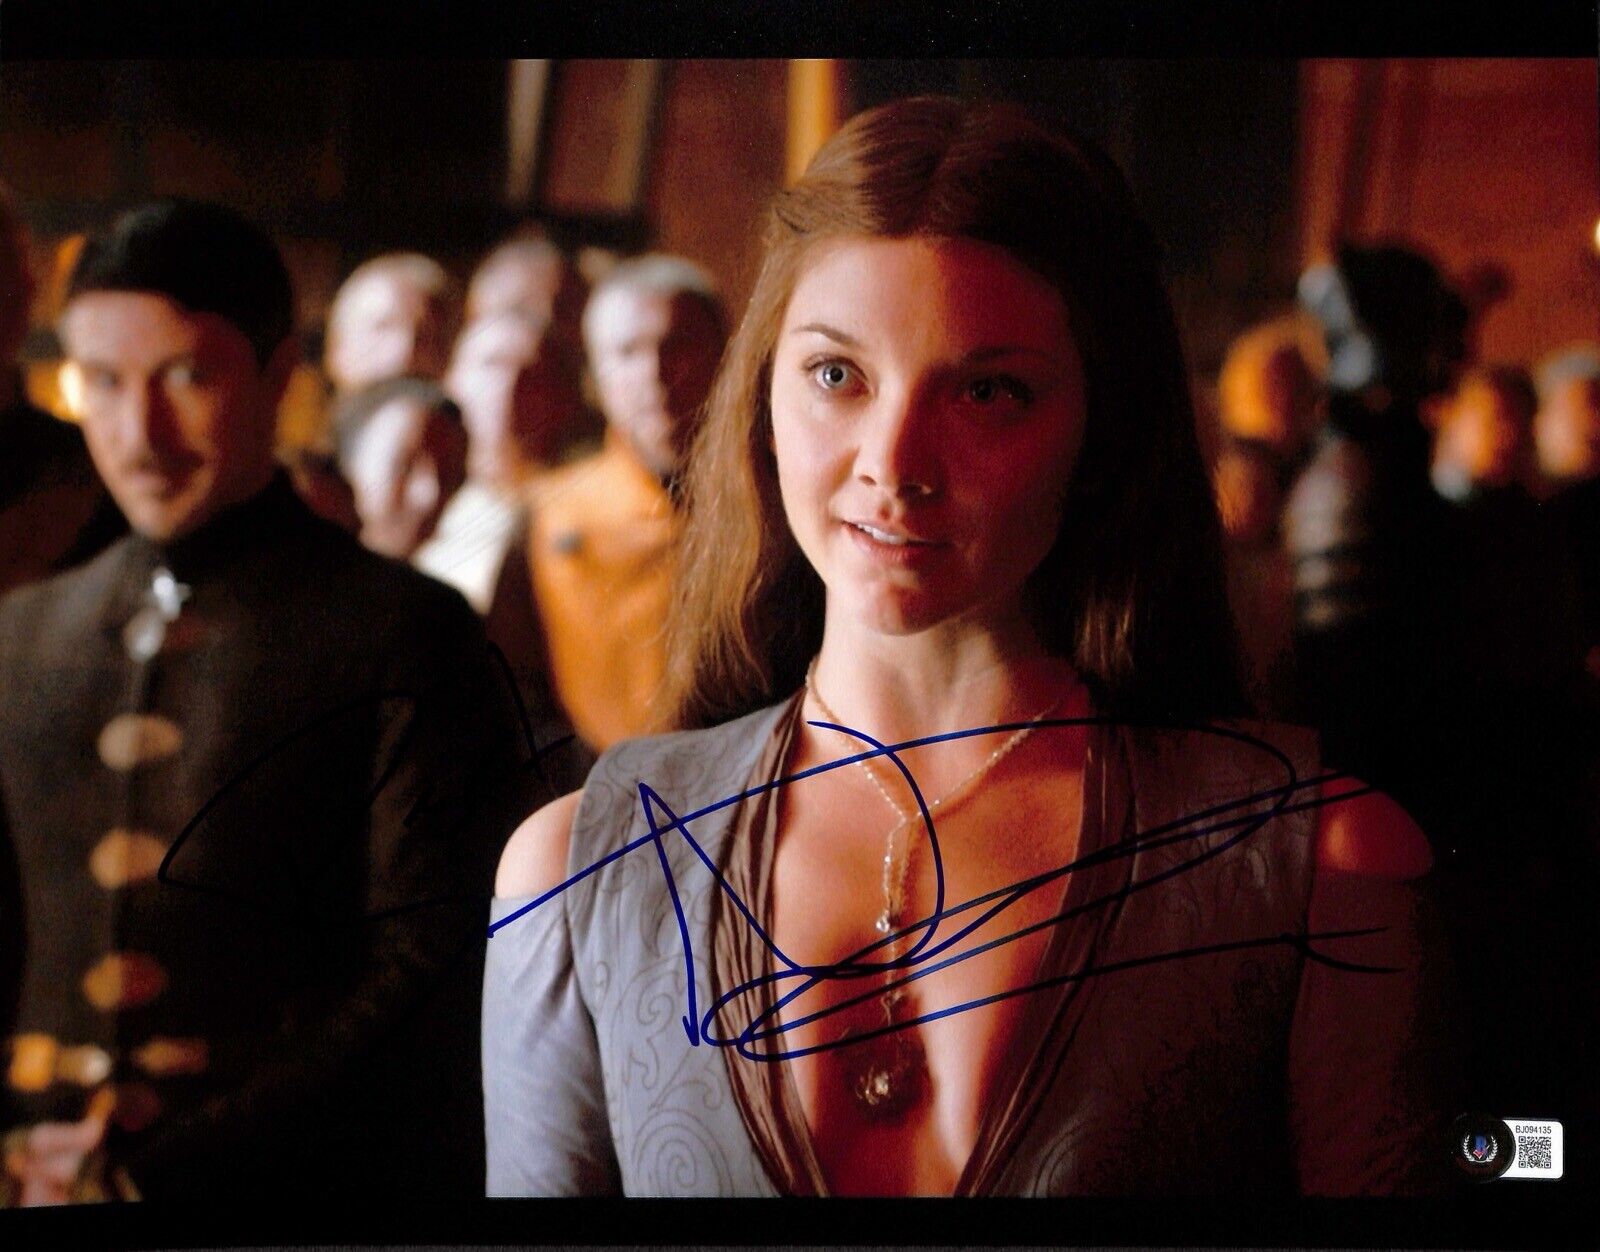 Game of Thrones Natalie Dormer “Margaery Tyrell” Signed 11x14 Photograph BECKETT